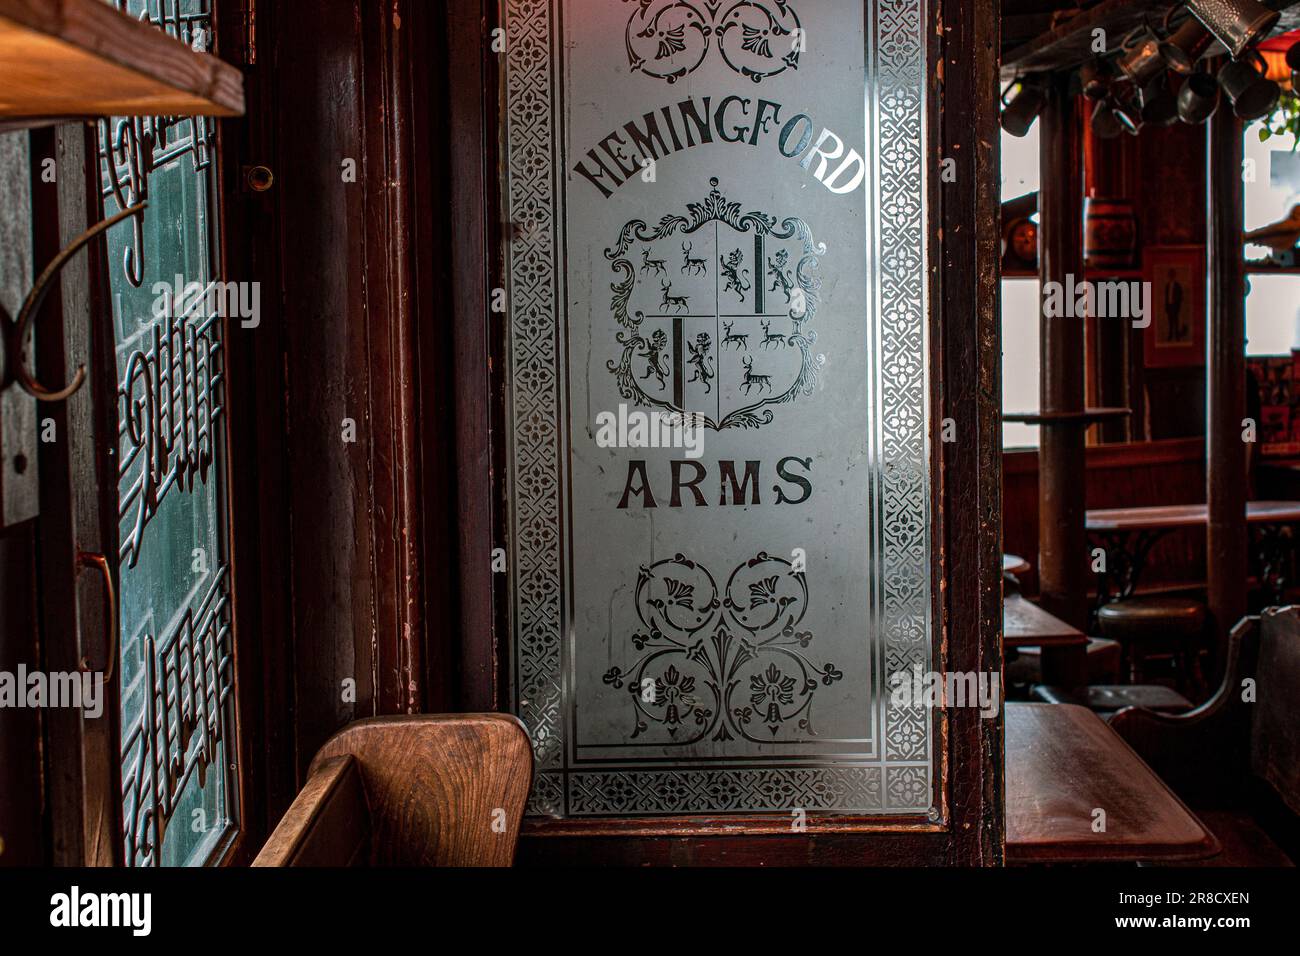 The Hemingford Arms pub, on Hemingford Road in London, UK Stock Photo